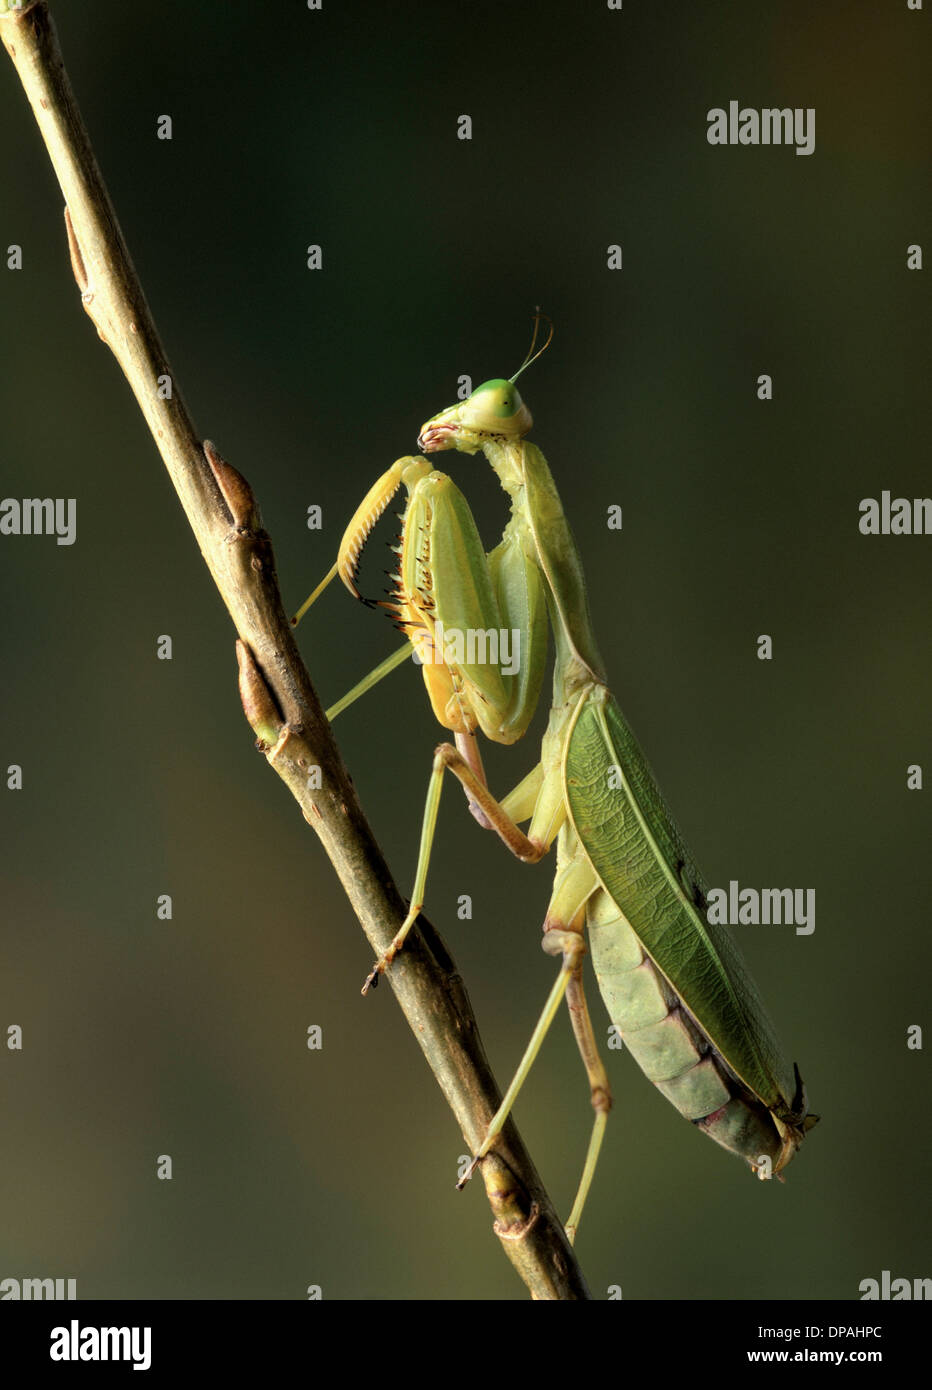 Praying Mantis on a branch Stock Photo